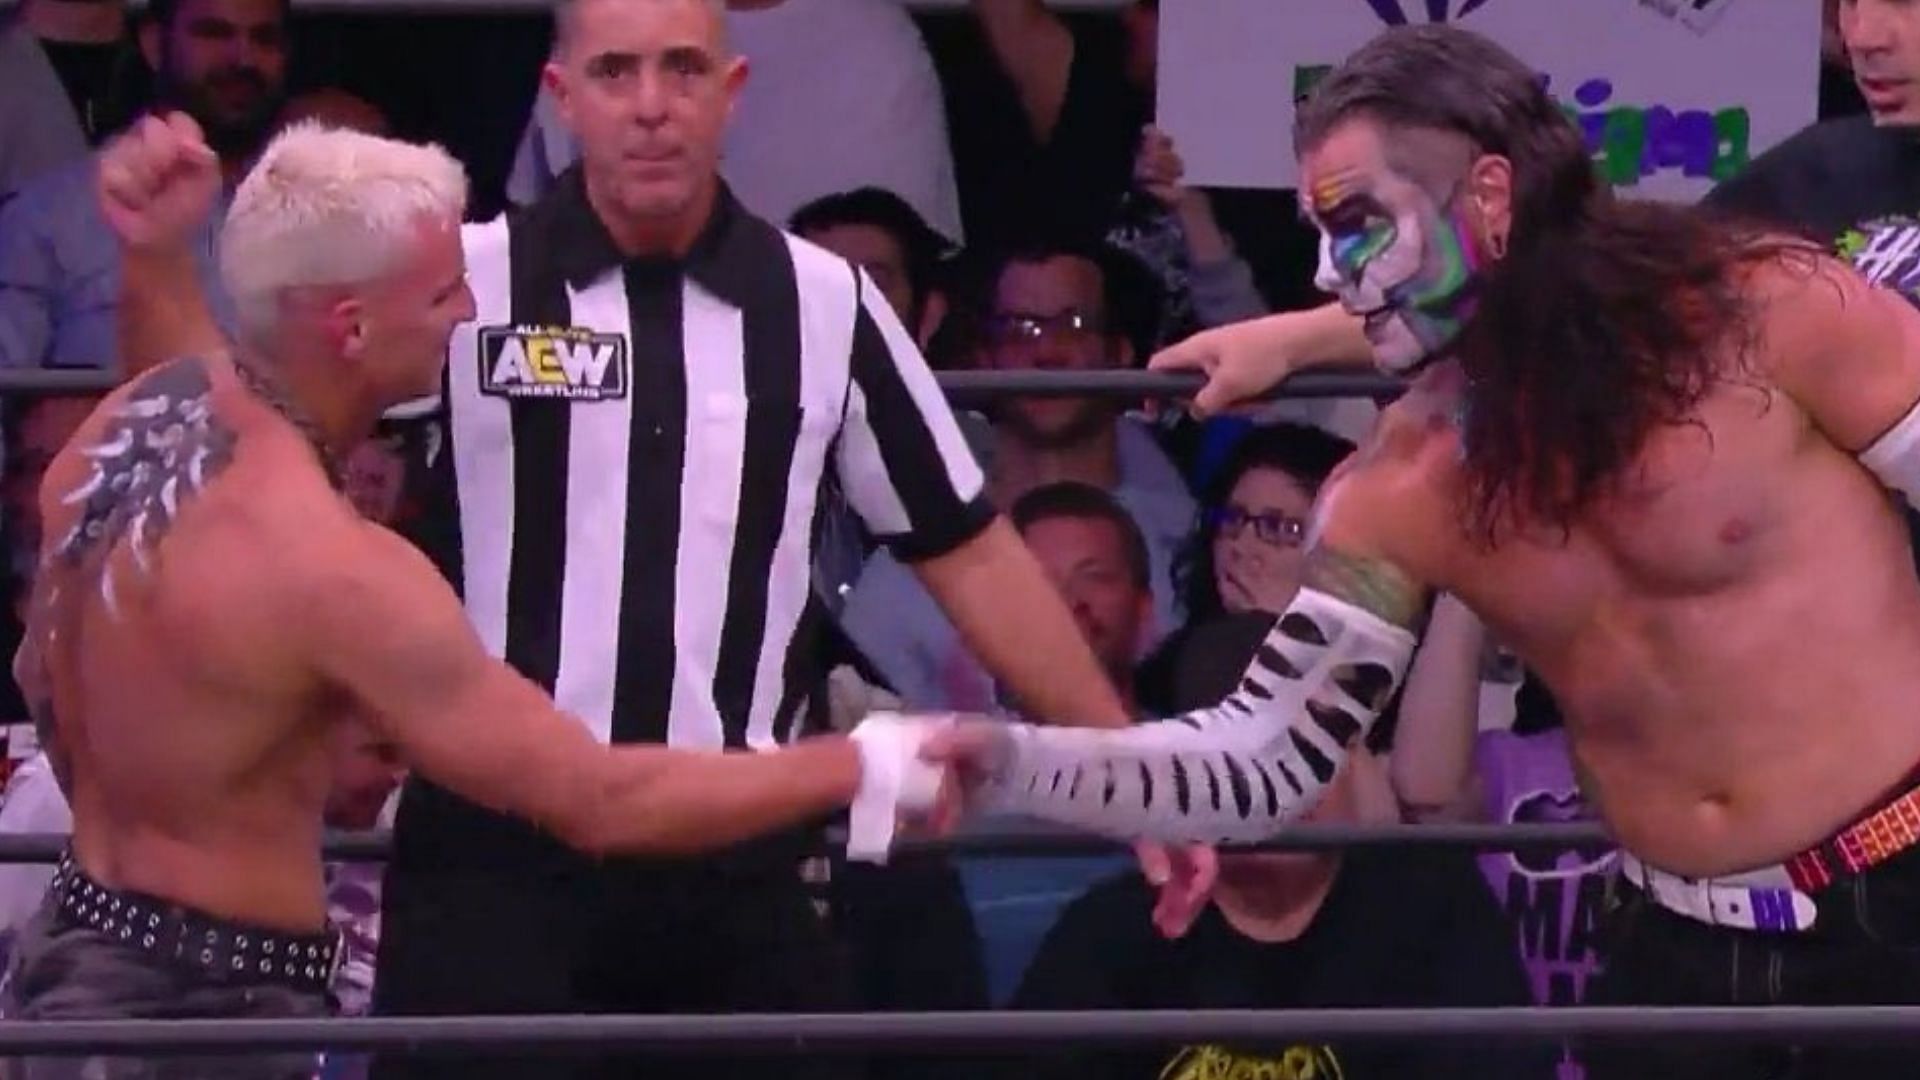 Jeff Hardy vs. Darby Allin from AEW Dynamite